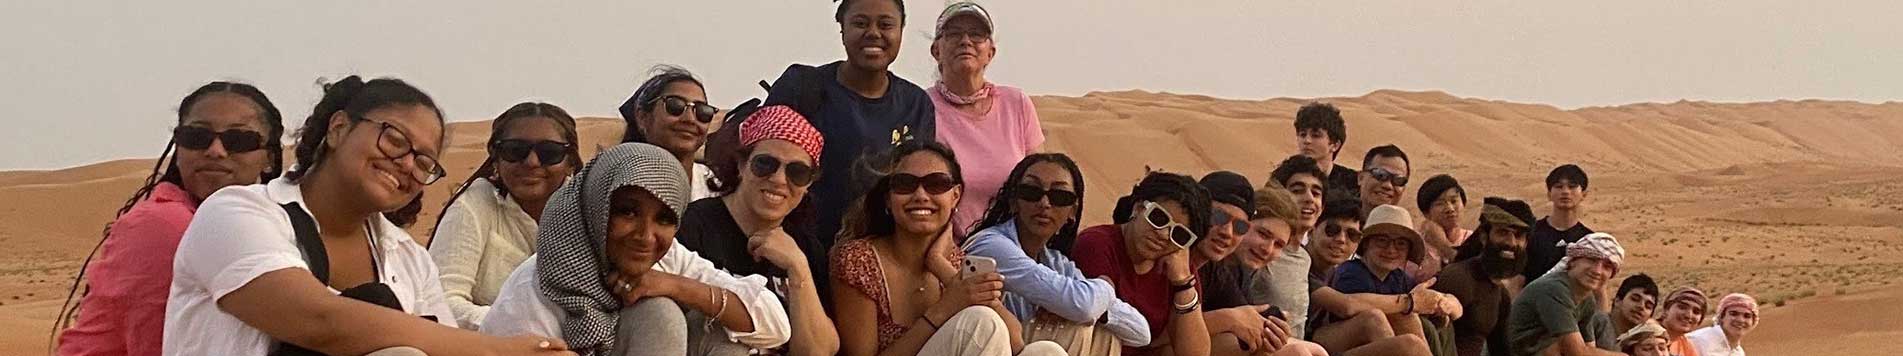 Oman Dubai trip group photo